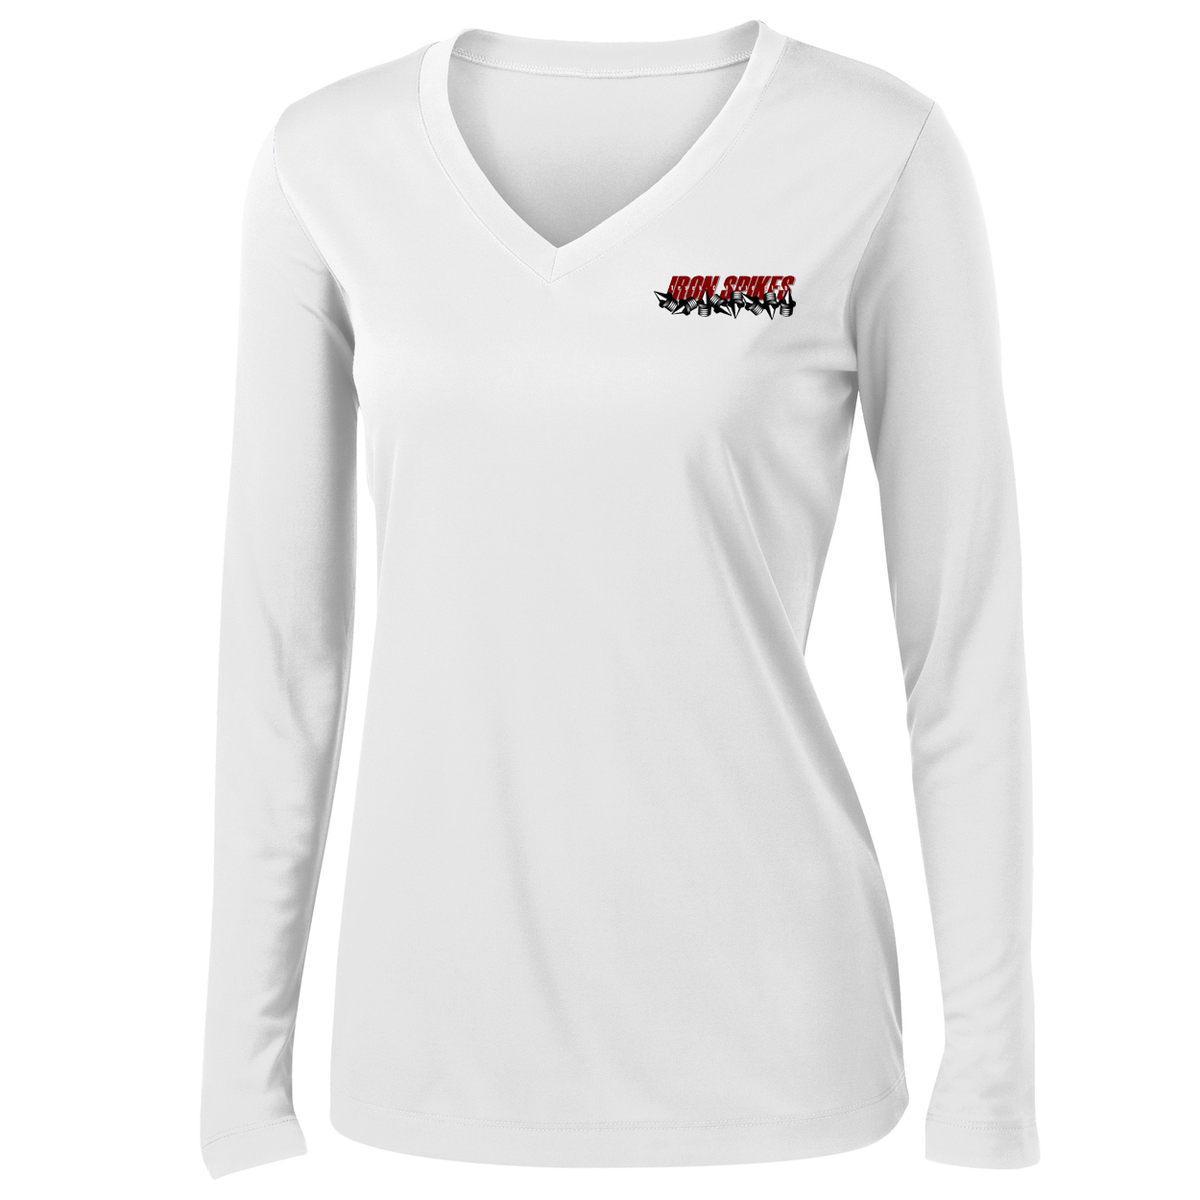 Iron Spikes Track & Field Women's Long Sleeve Performance Shirt